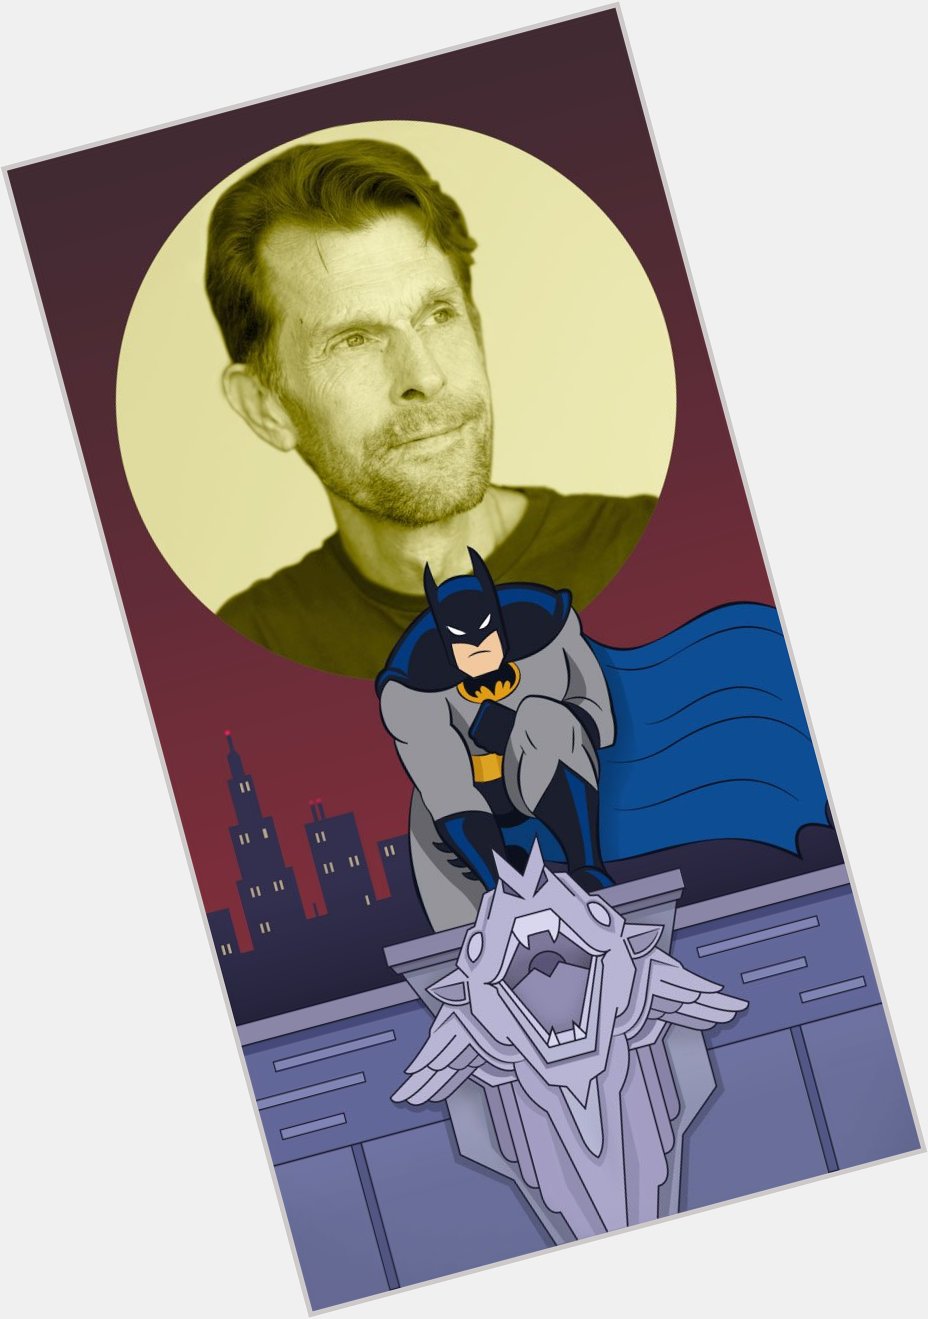 Happy birthday to the one true Batman, Kevin Conroy. 